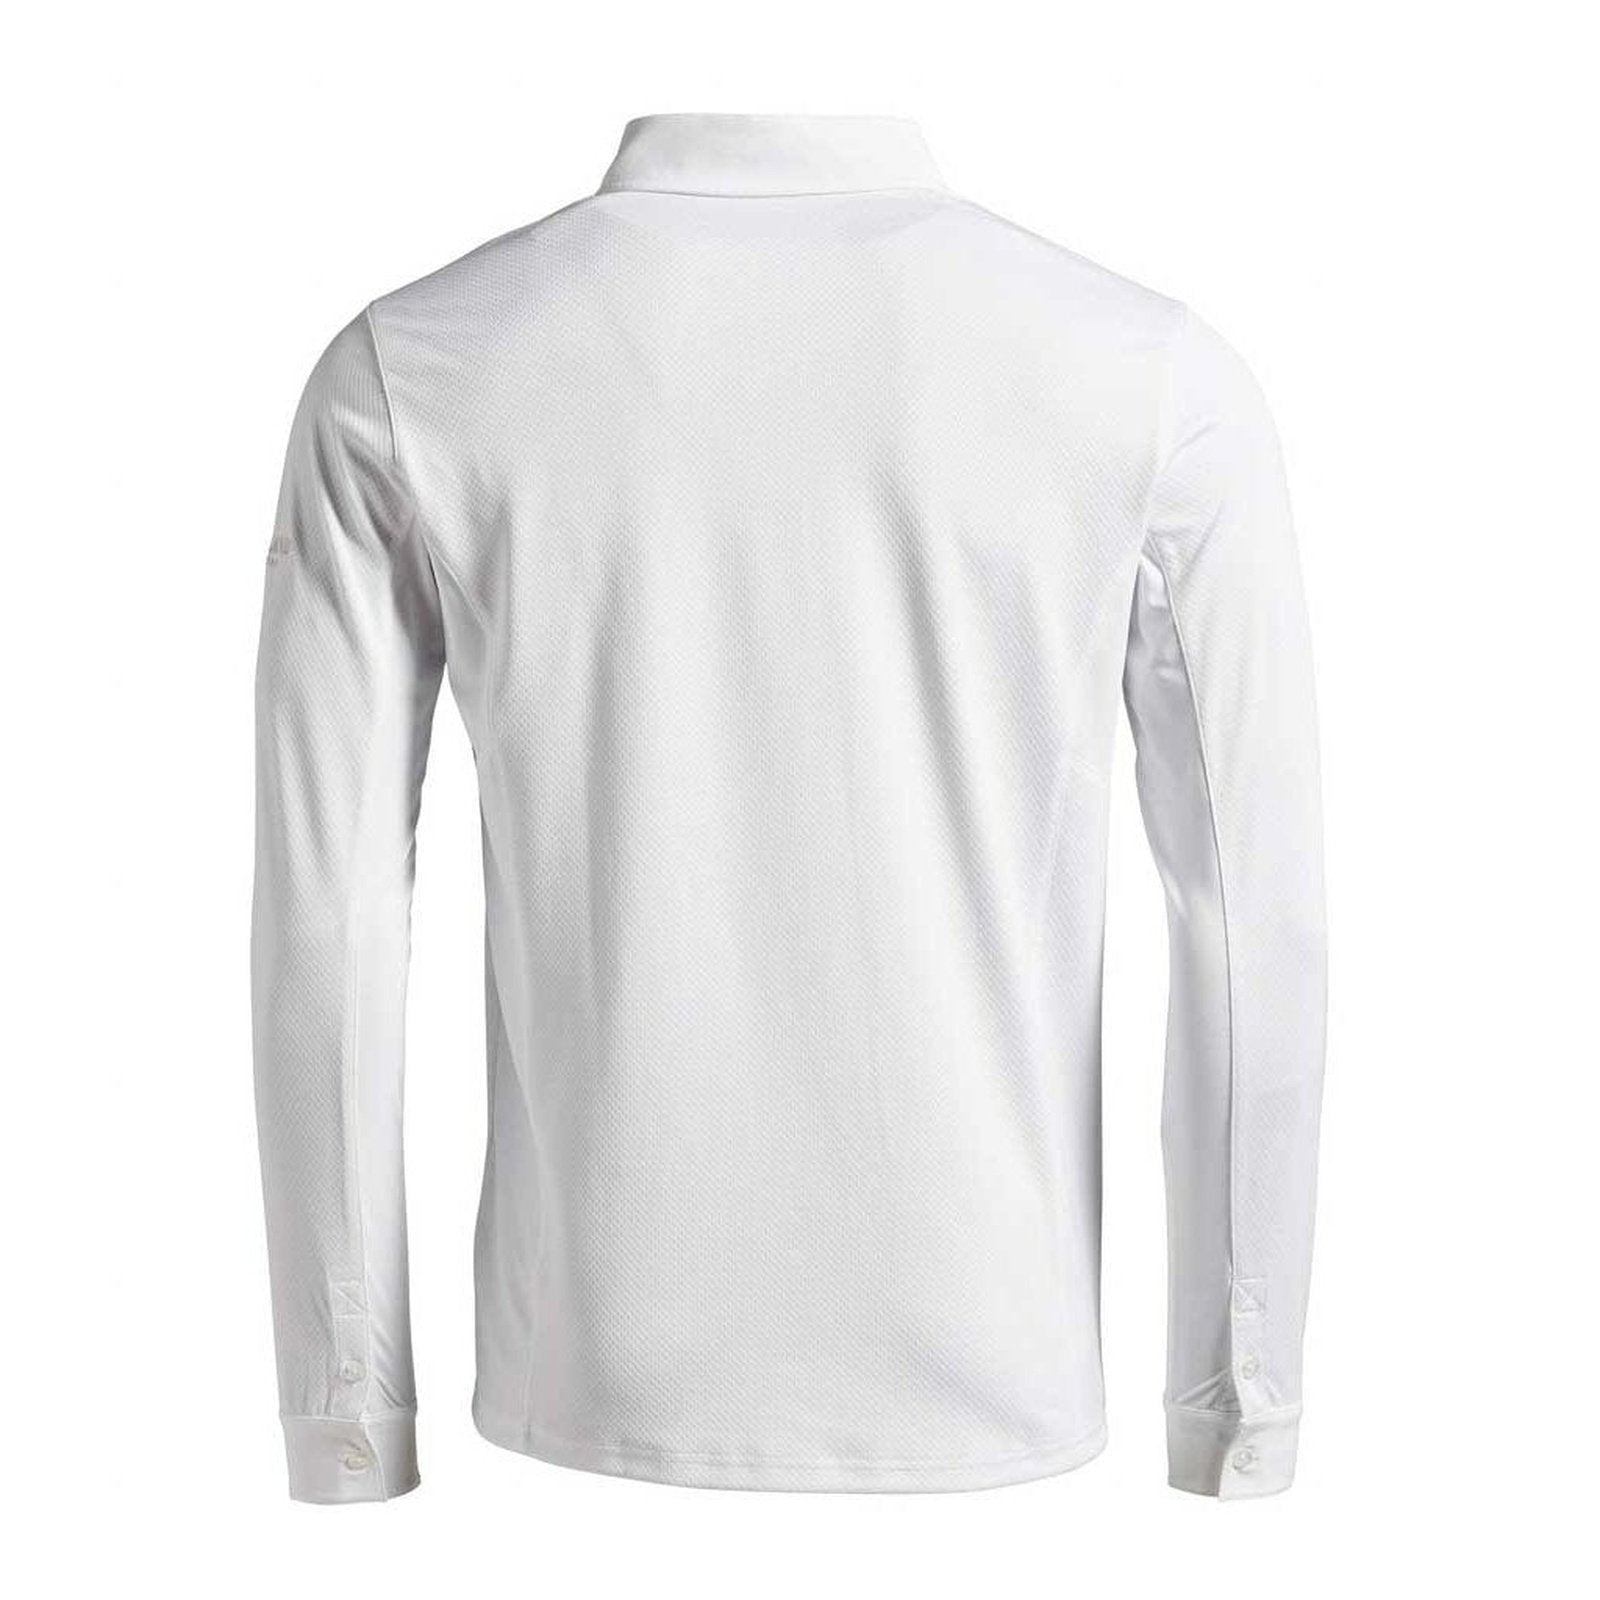 Kingsland KLClassic langärmeliges Turniershirt in weiß für Herren bei SP-Reitsport Kingsland bei SP-Reitsport